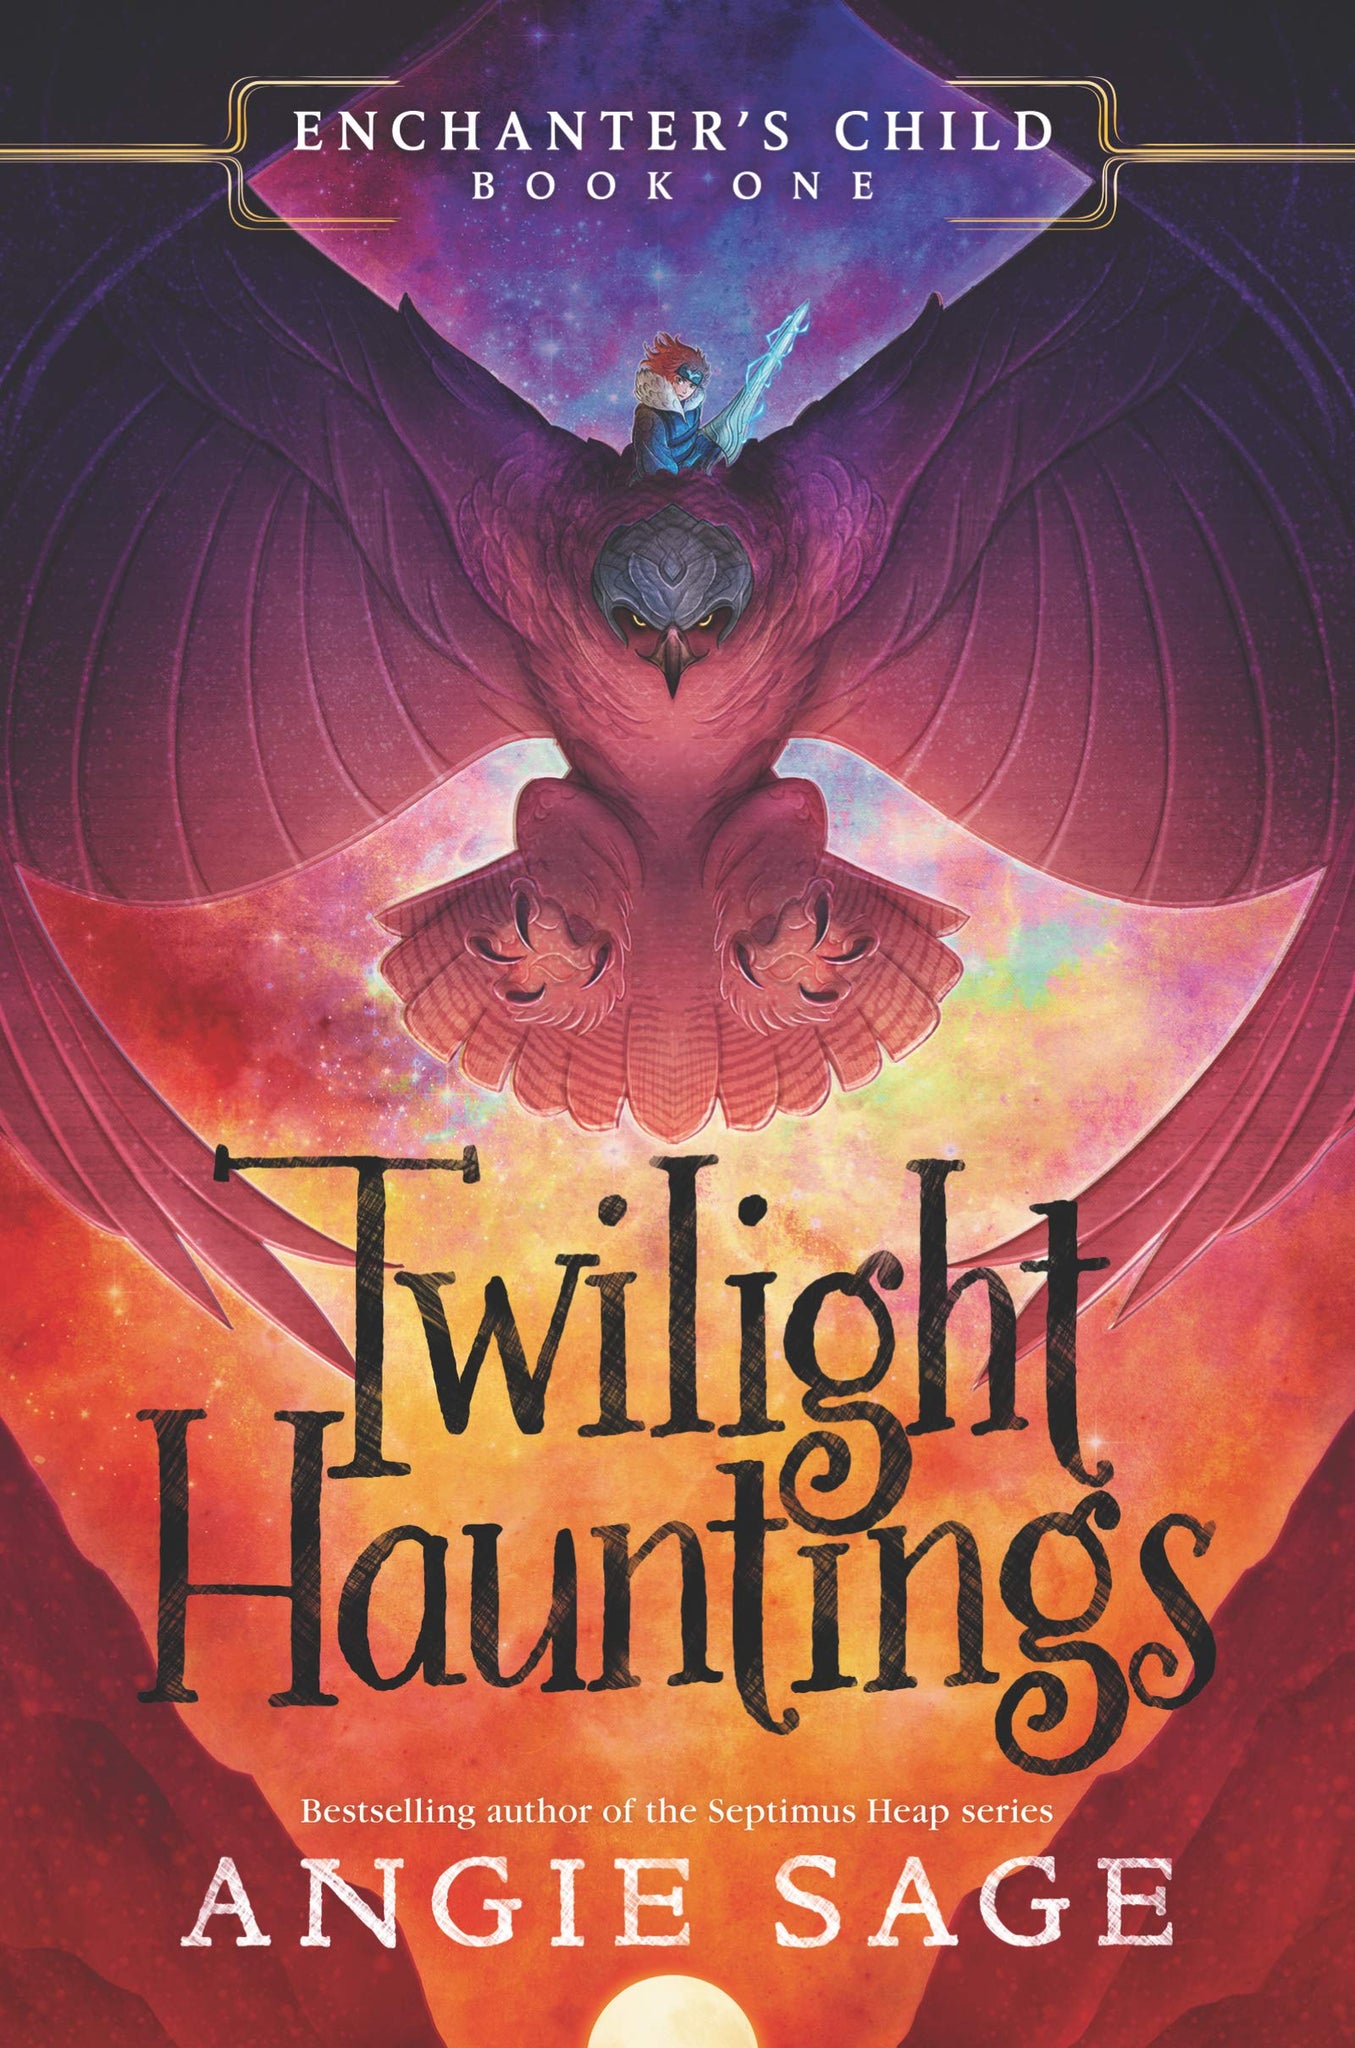 Enchanter’s Child, Book One : Twilight Hauntings - Hardback